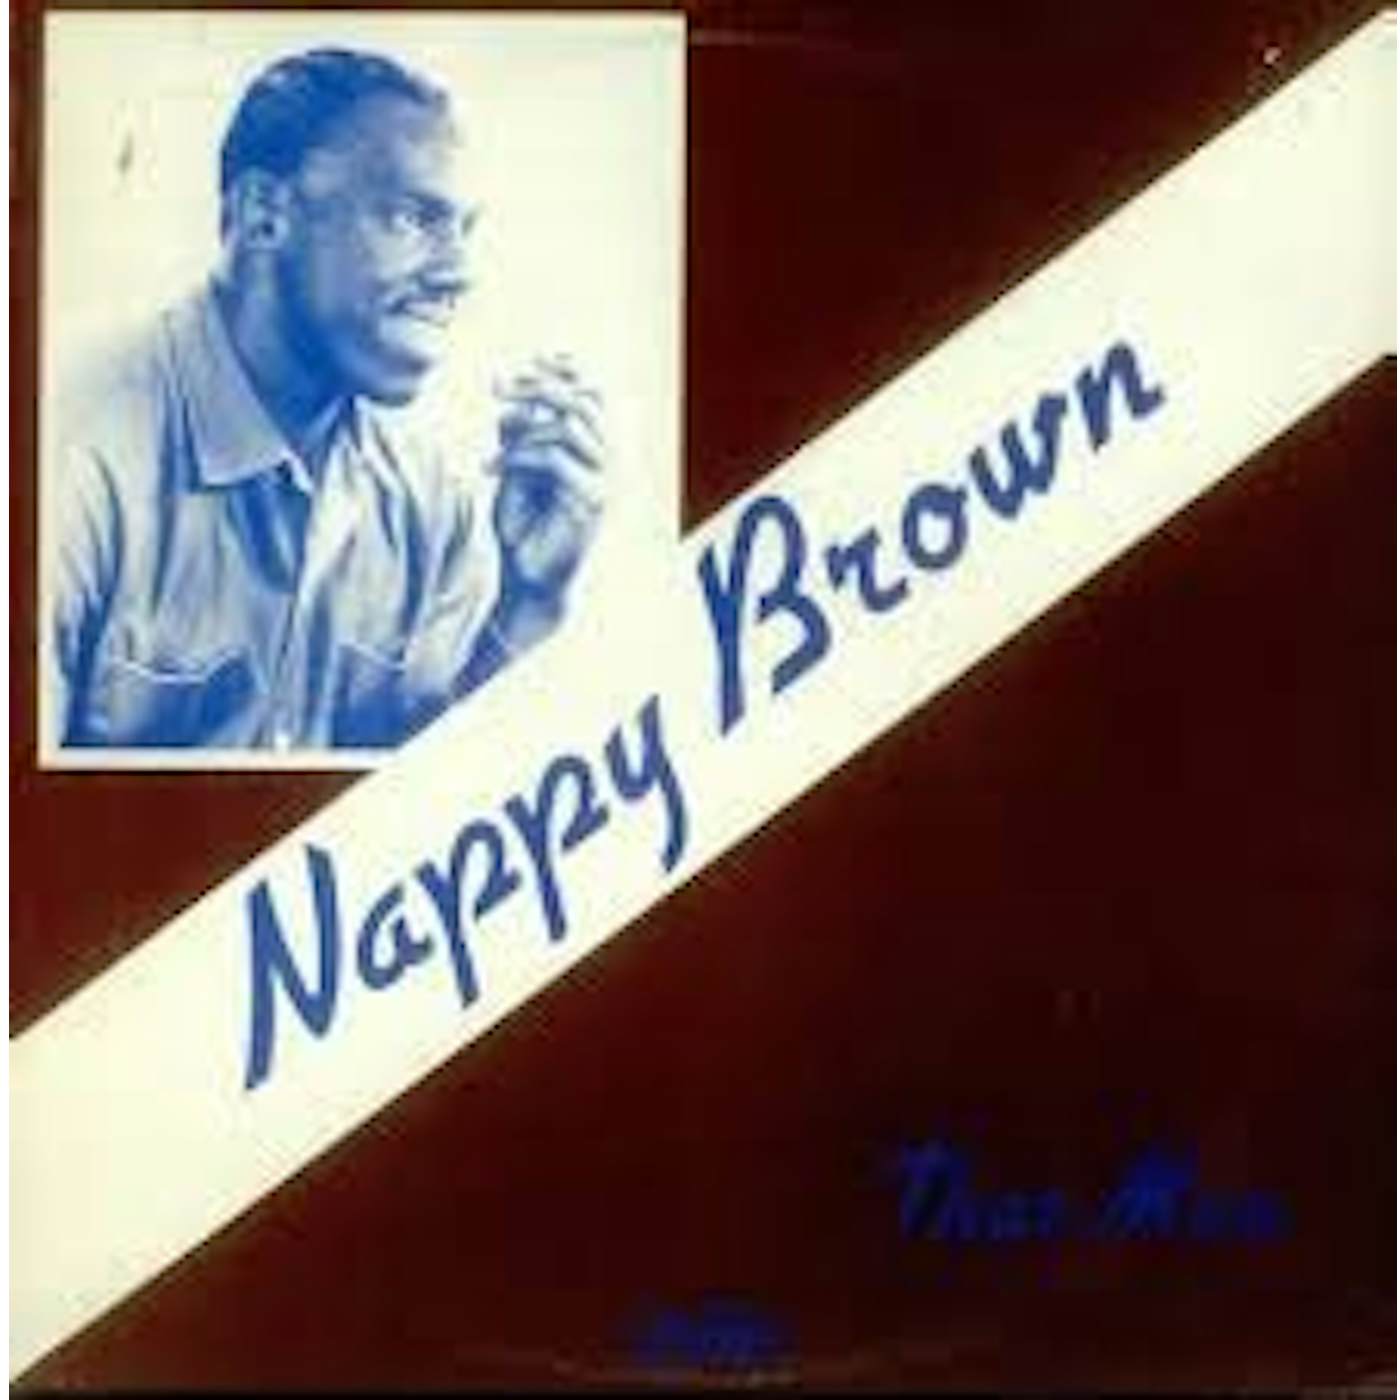 Nappy Brown That Man Vinyl Record